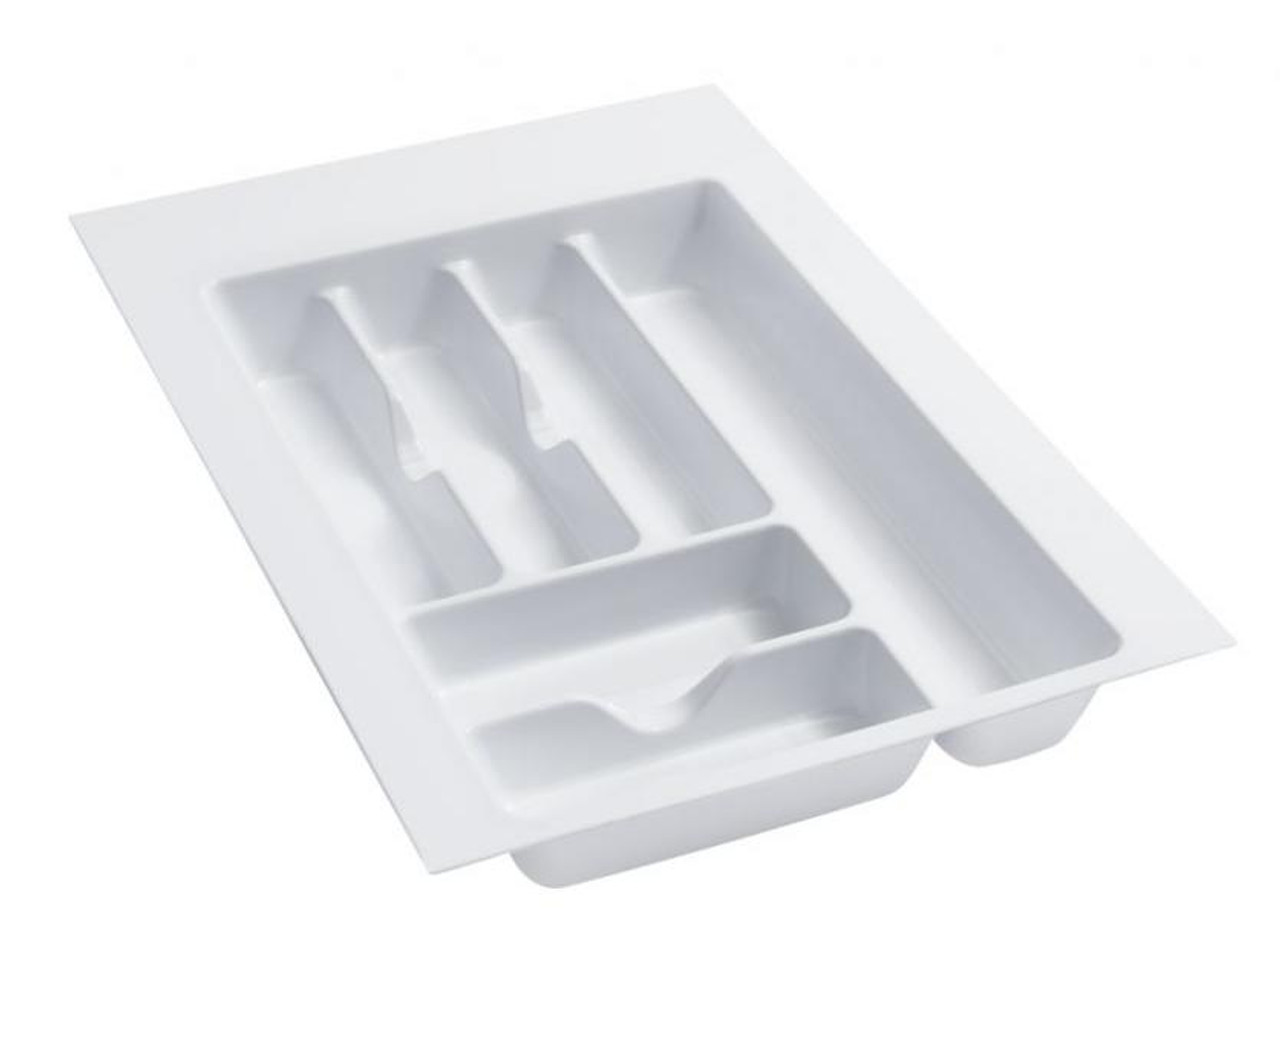 Rev-A-Shelf Rev-a-shelf Polymer Cutlery Trays Almond or White GCT Series 